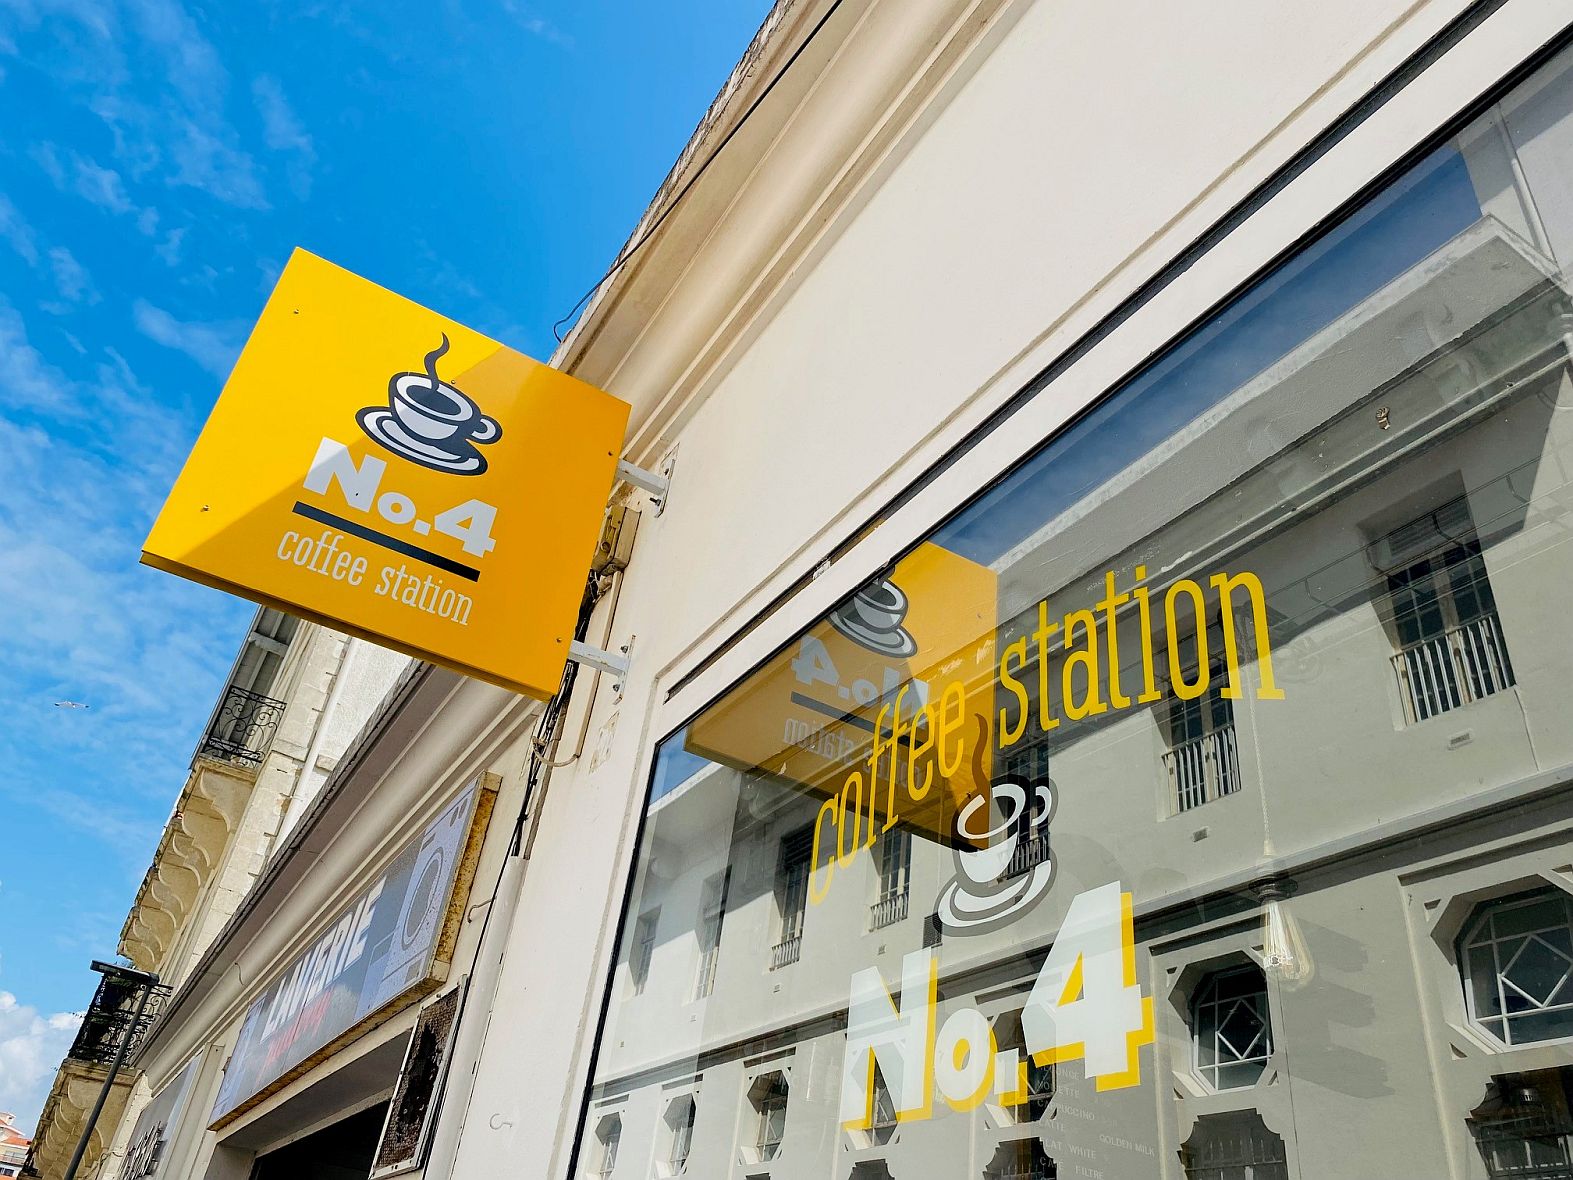 No. 4 Coffee Station